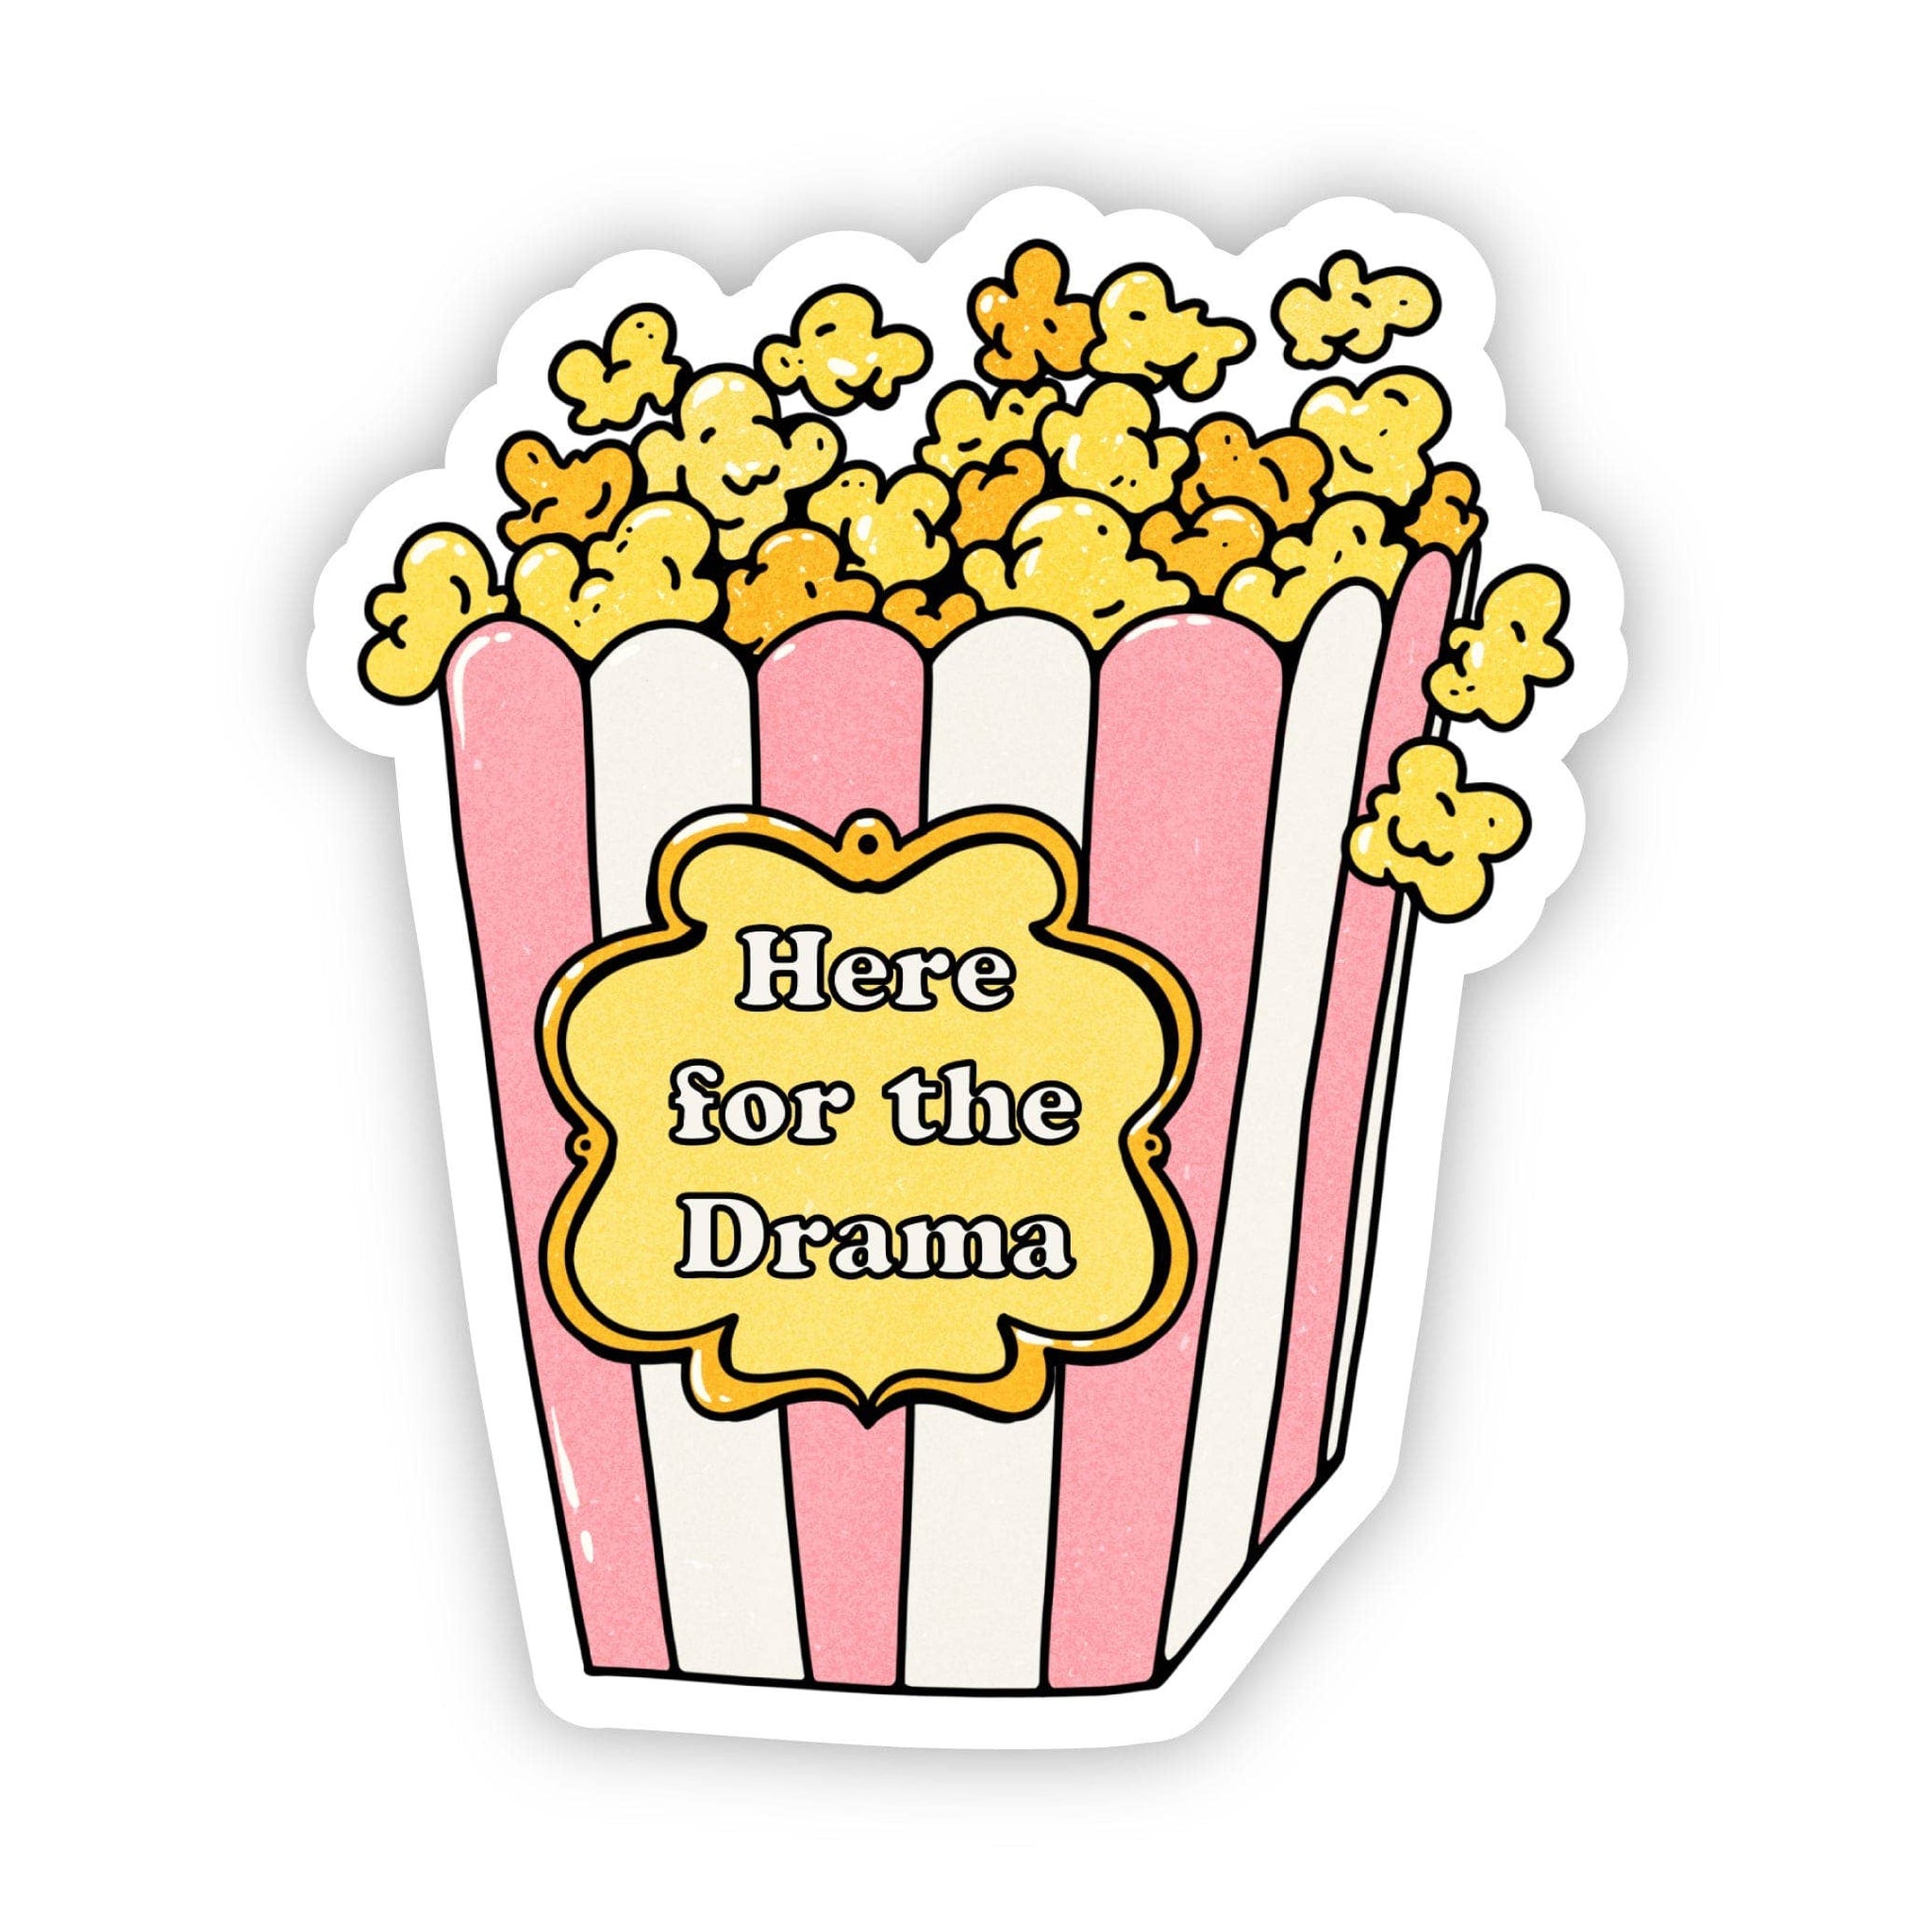 Big Moods - "Here for the drama" popcorn sticker